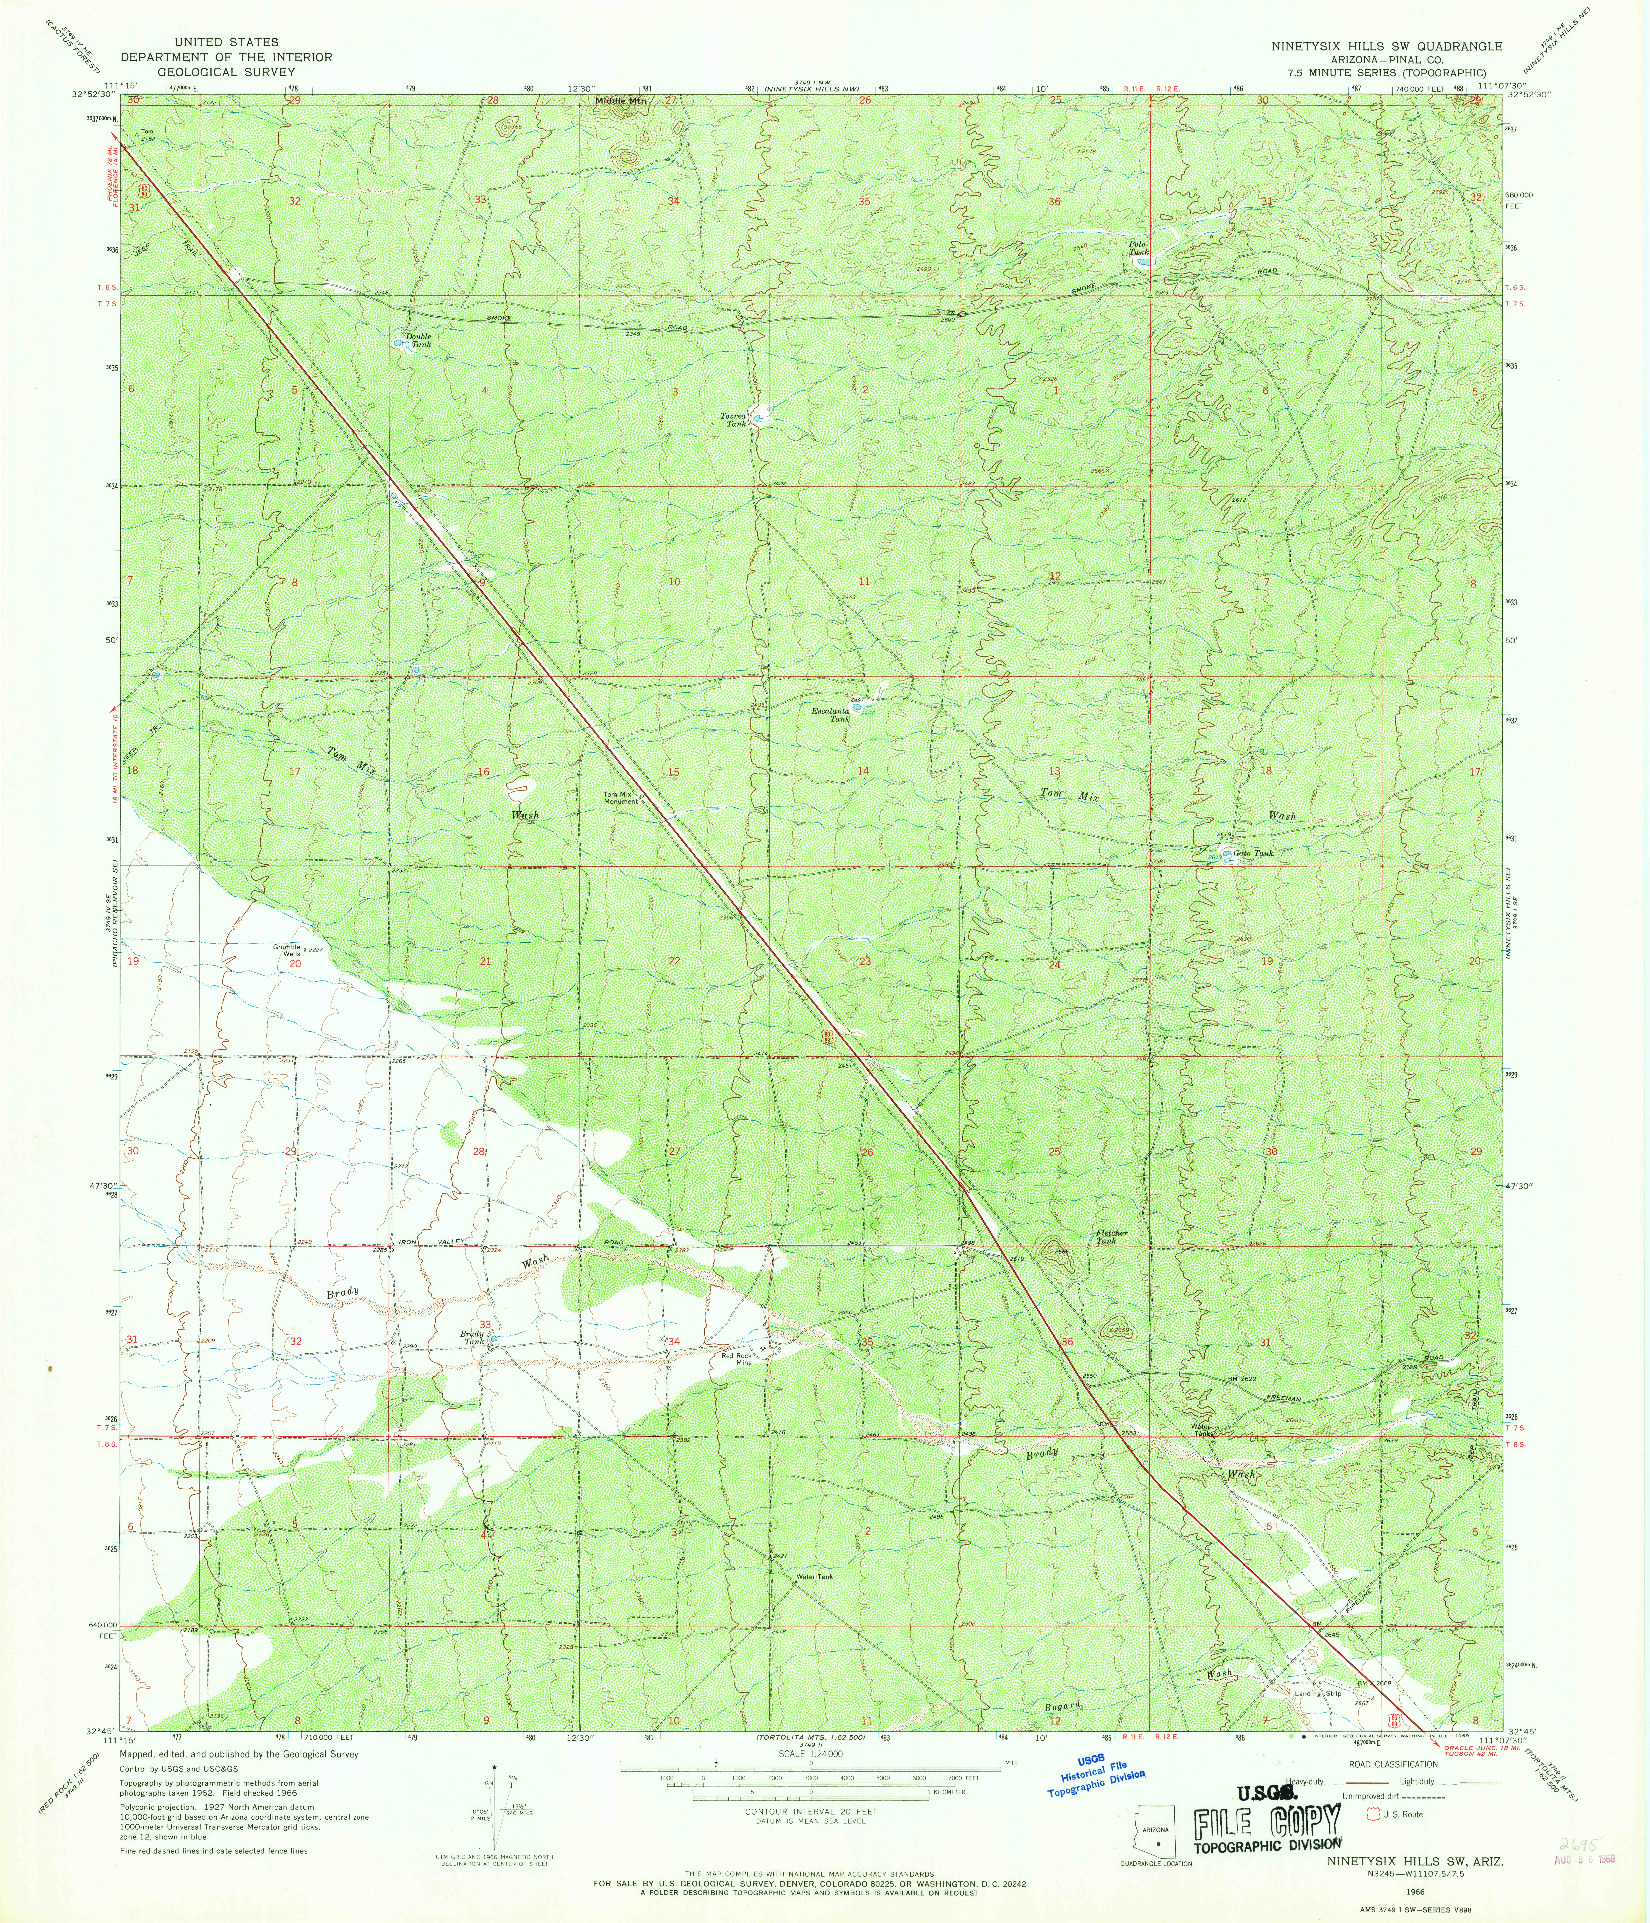 USGS 1:24000-SCALE QUADRANGLE FOR NINETYSIX HILLS SW, AZ 1966